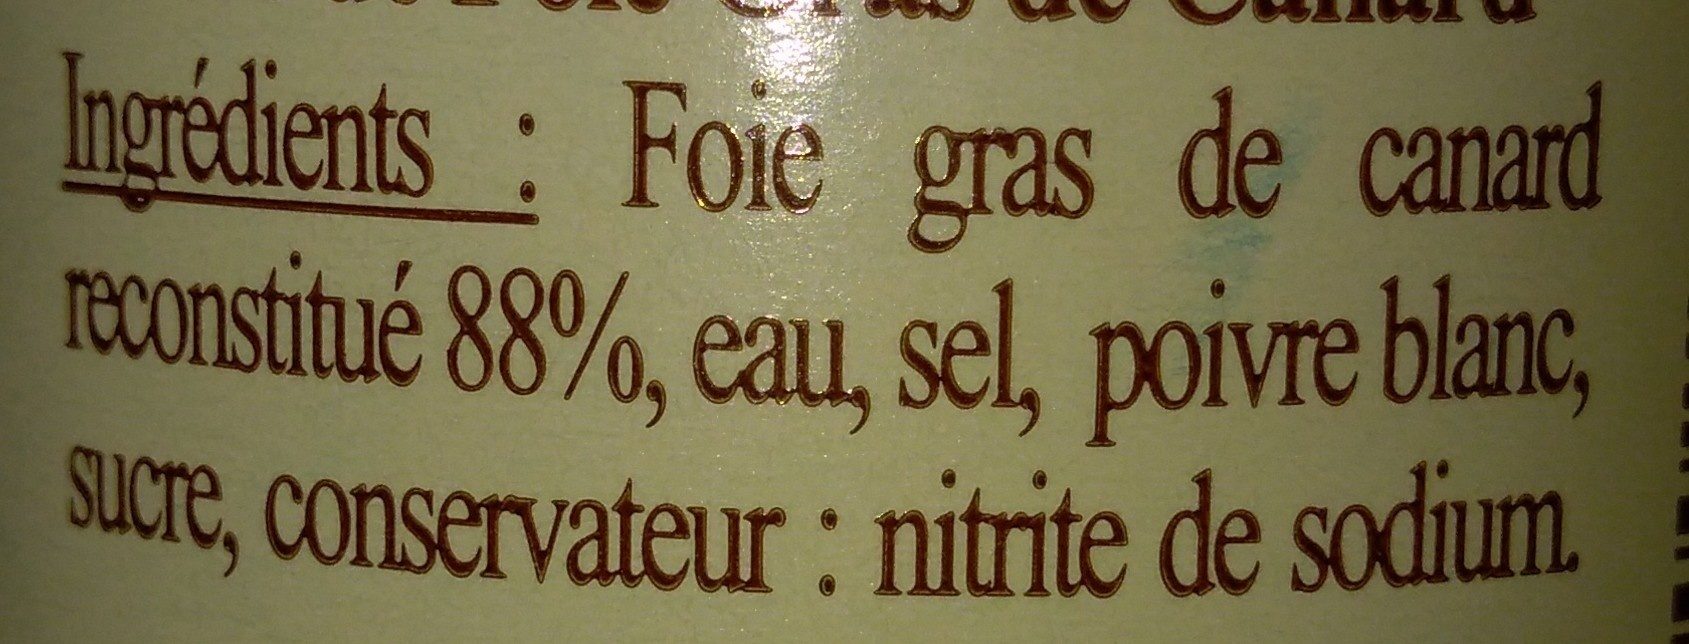 Bloc de foie gras de canard - Ingredients - fr